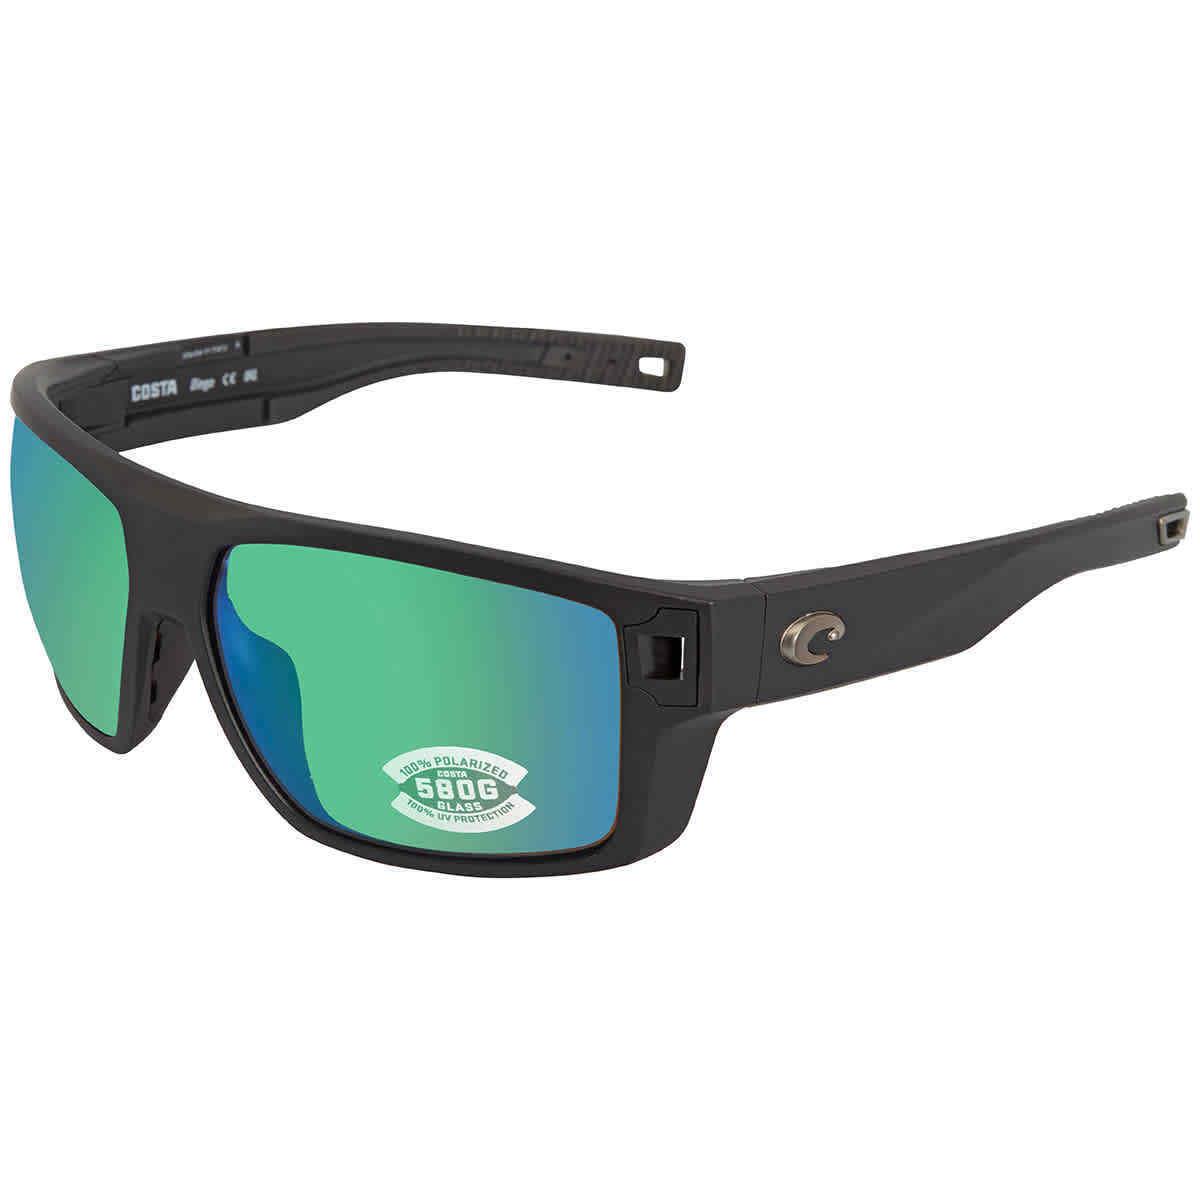 Costa Del Mar Diego Green Mirror Polarized Glass Men`s Sunglasses Dgo 11 Ogmglp - Frame: Black, Lens: Green